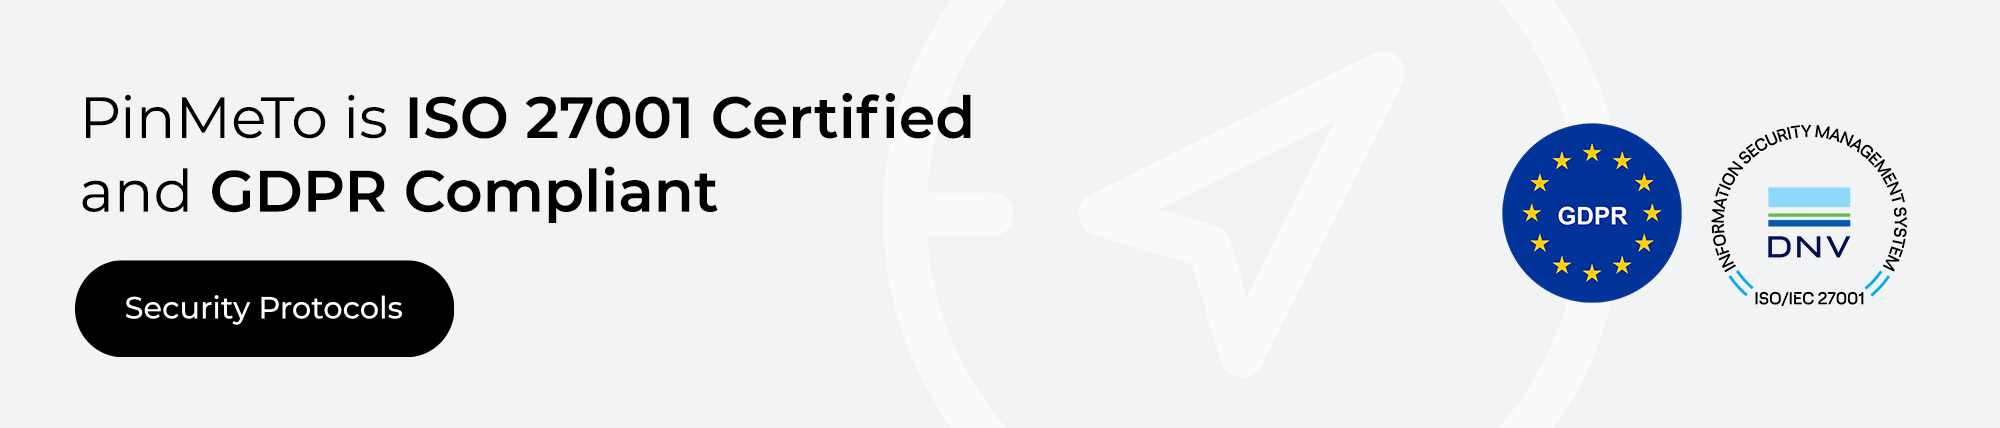 banner-iso-certification (1)